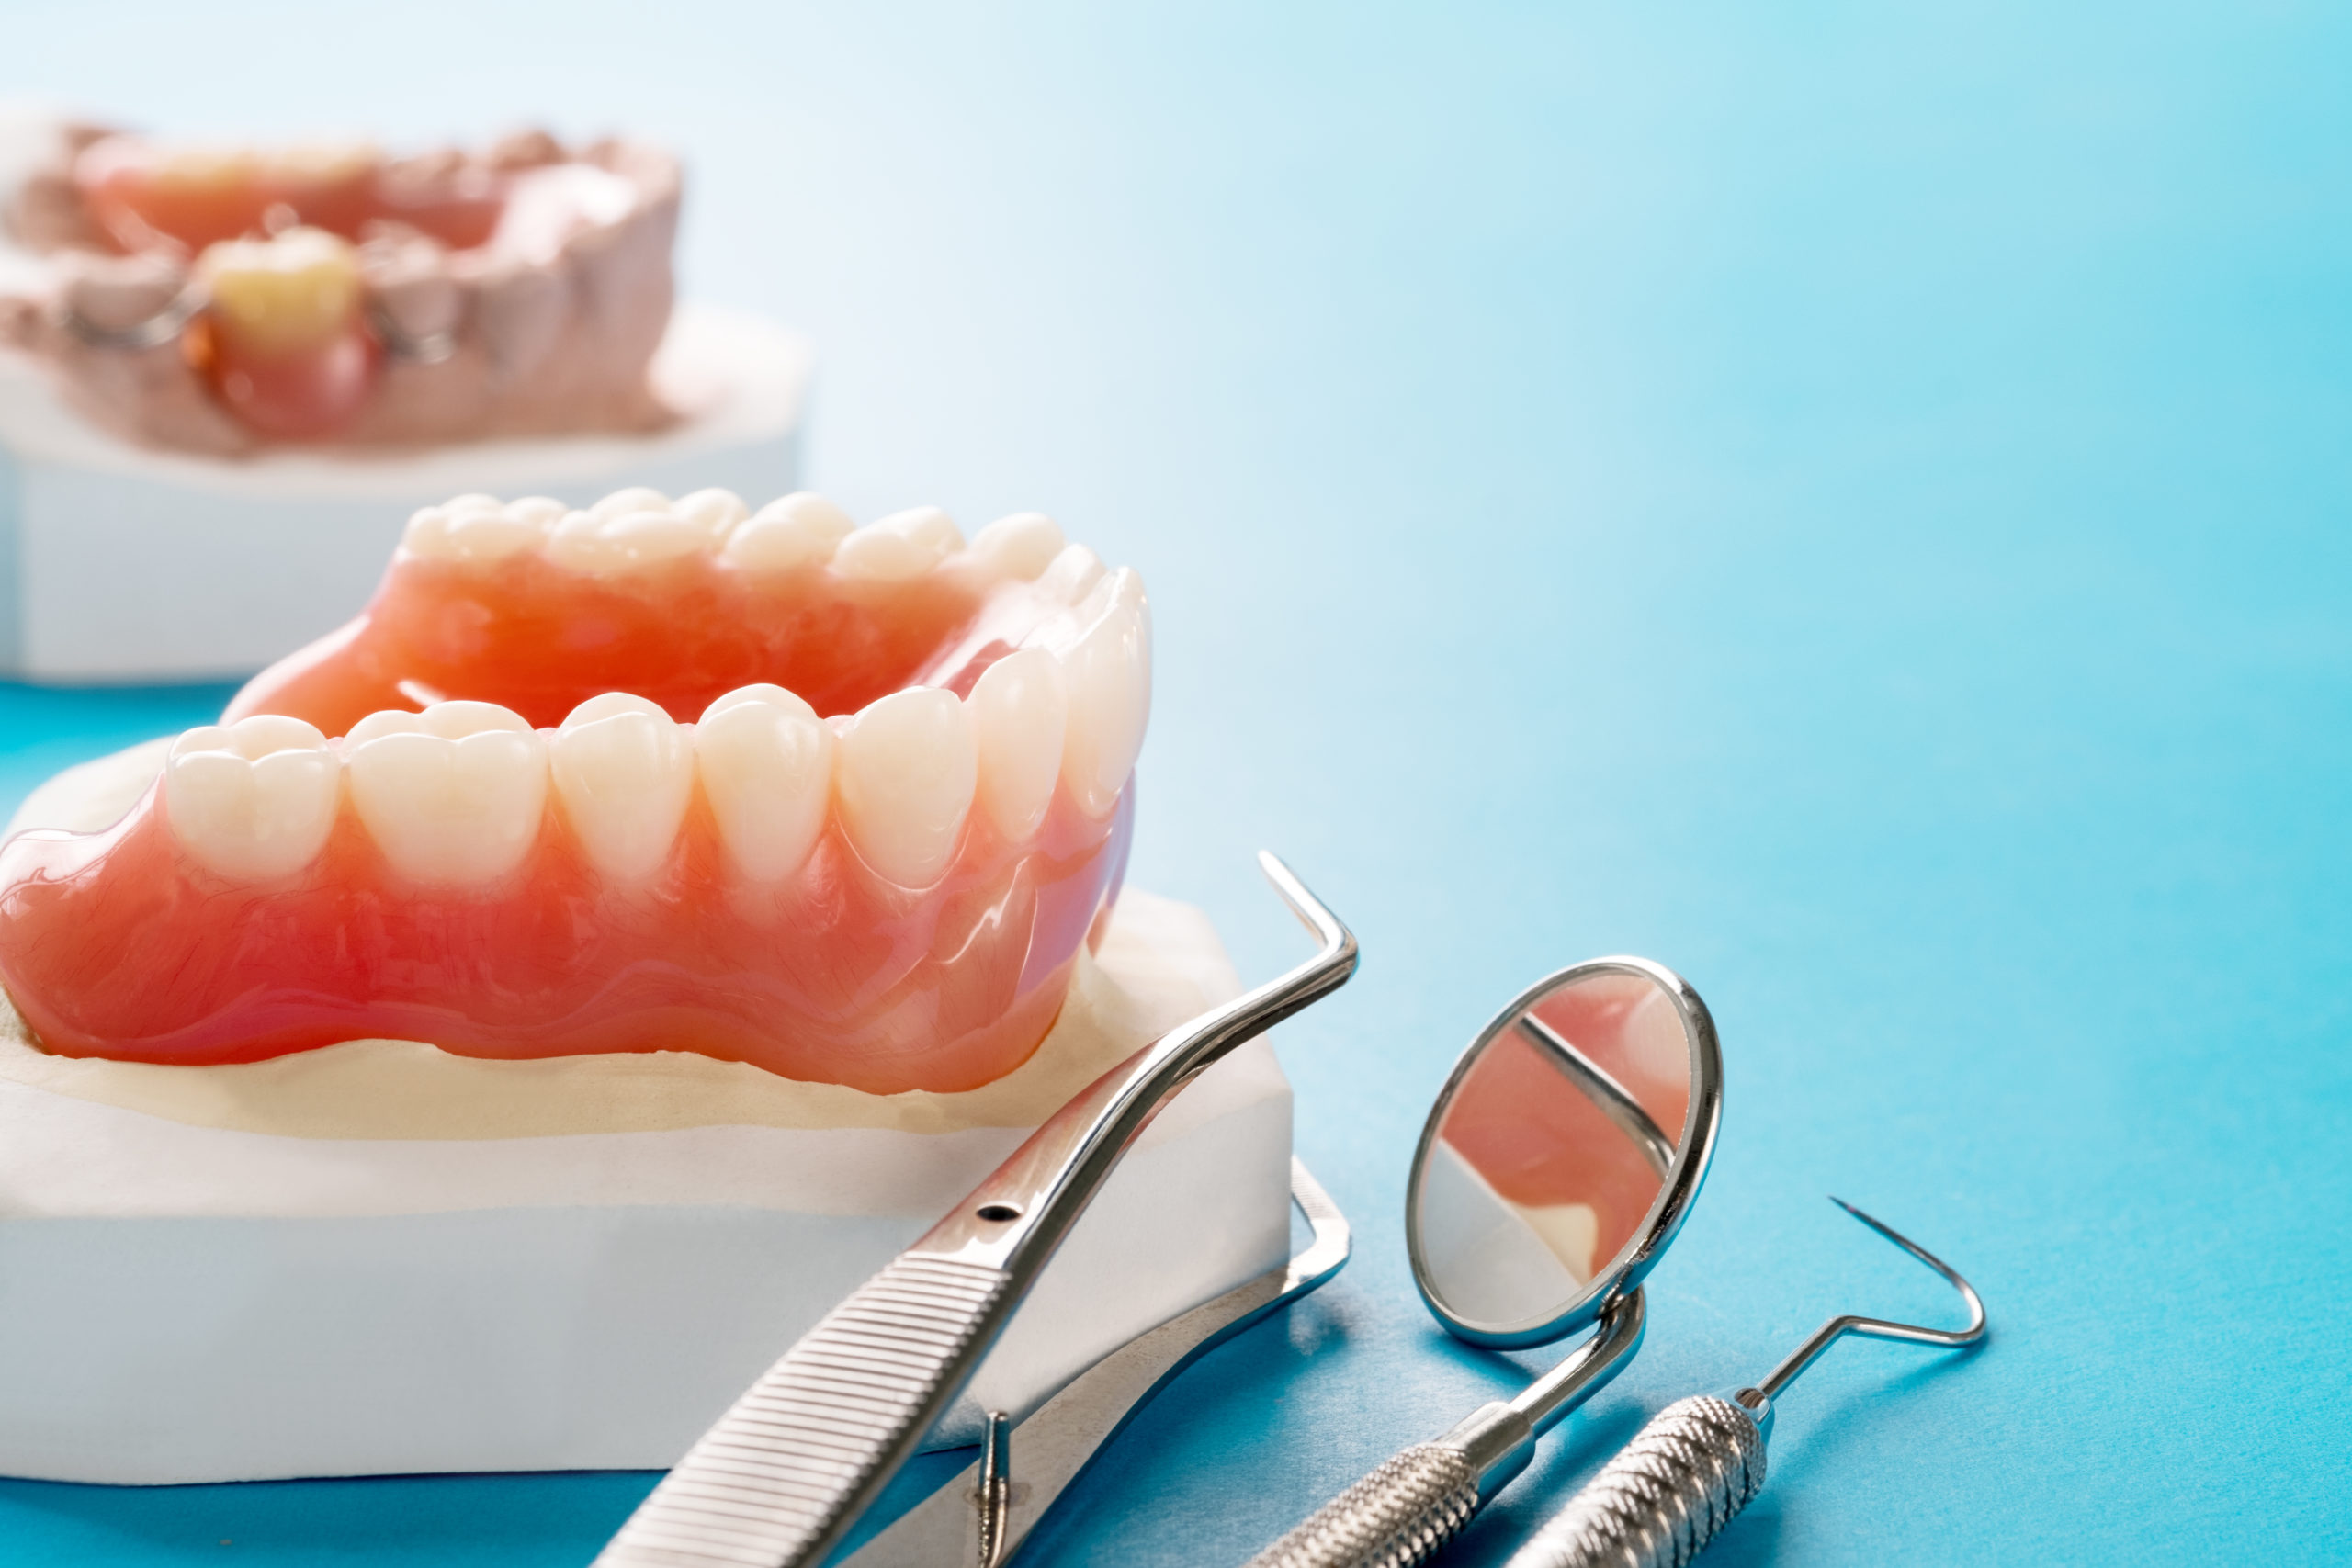 Close up , Complete denture or full denture on blue background.